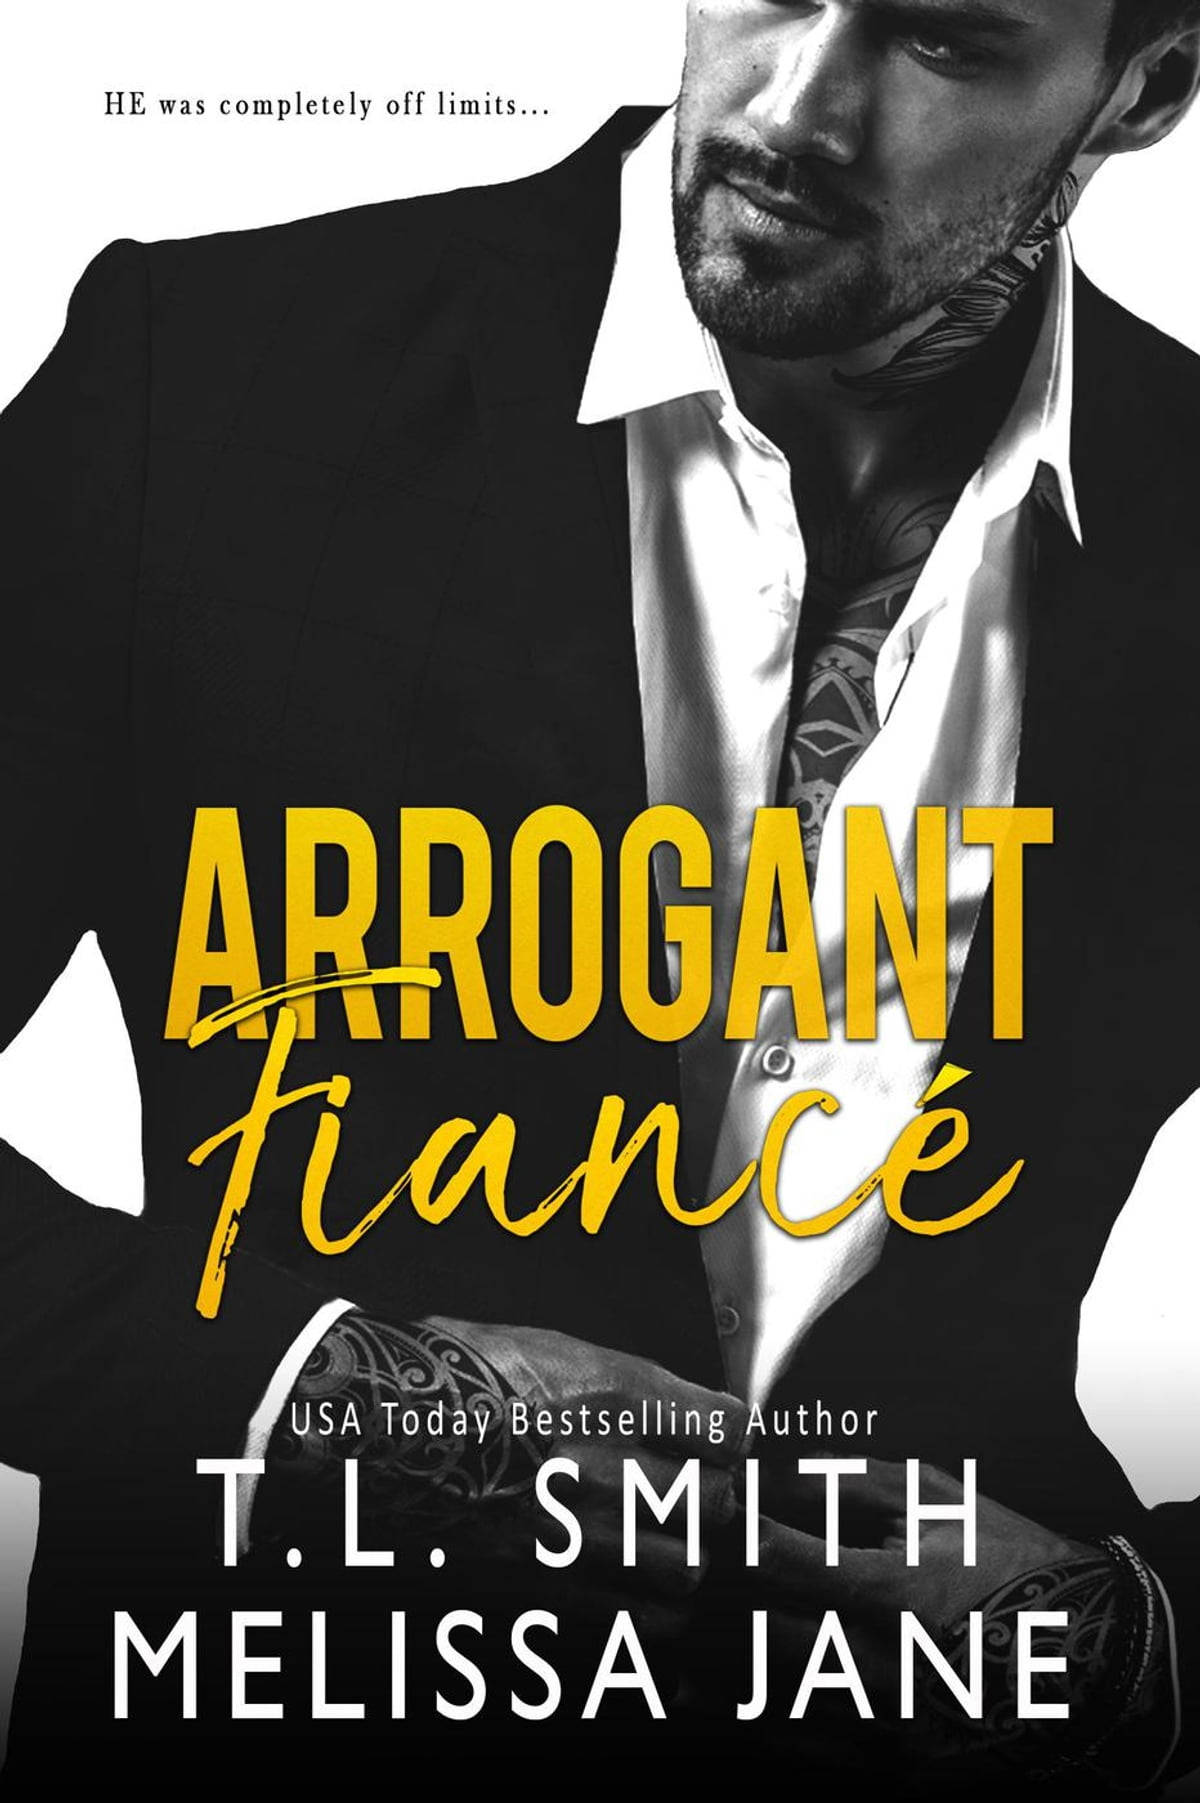 Arrogant Fiance Book Cover Wallpaper